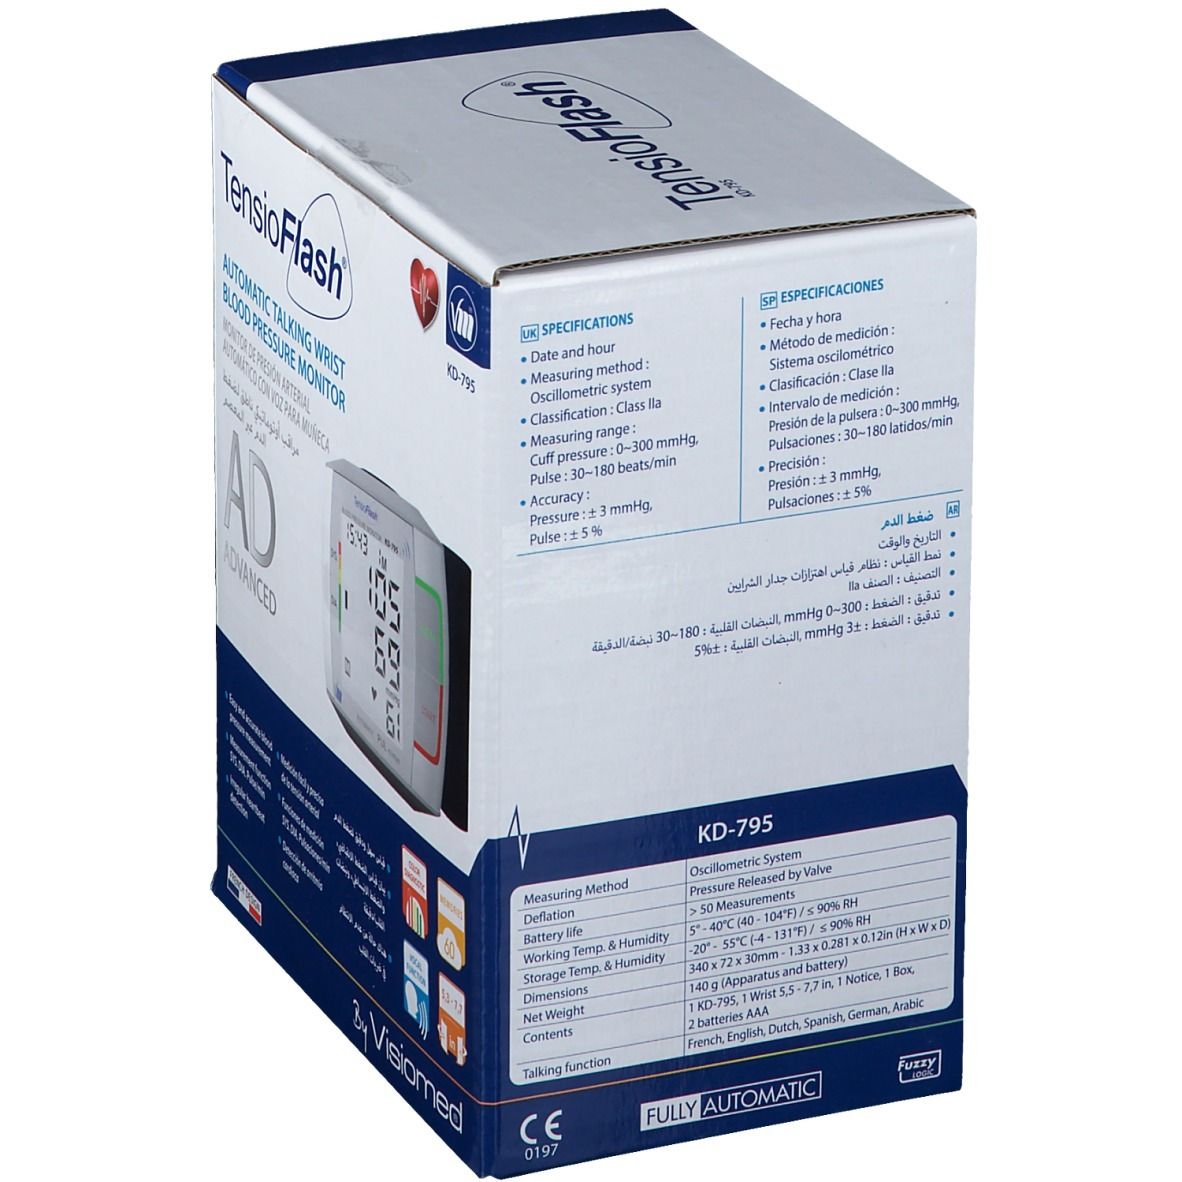 TensioFlash® AD ADVANCED Monitor de presion arterial